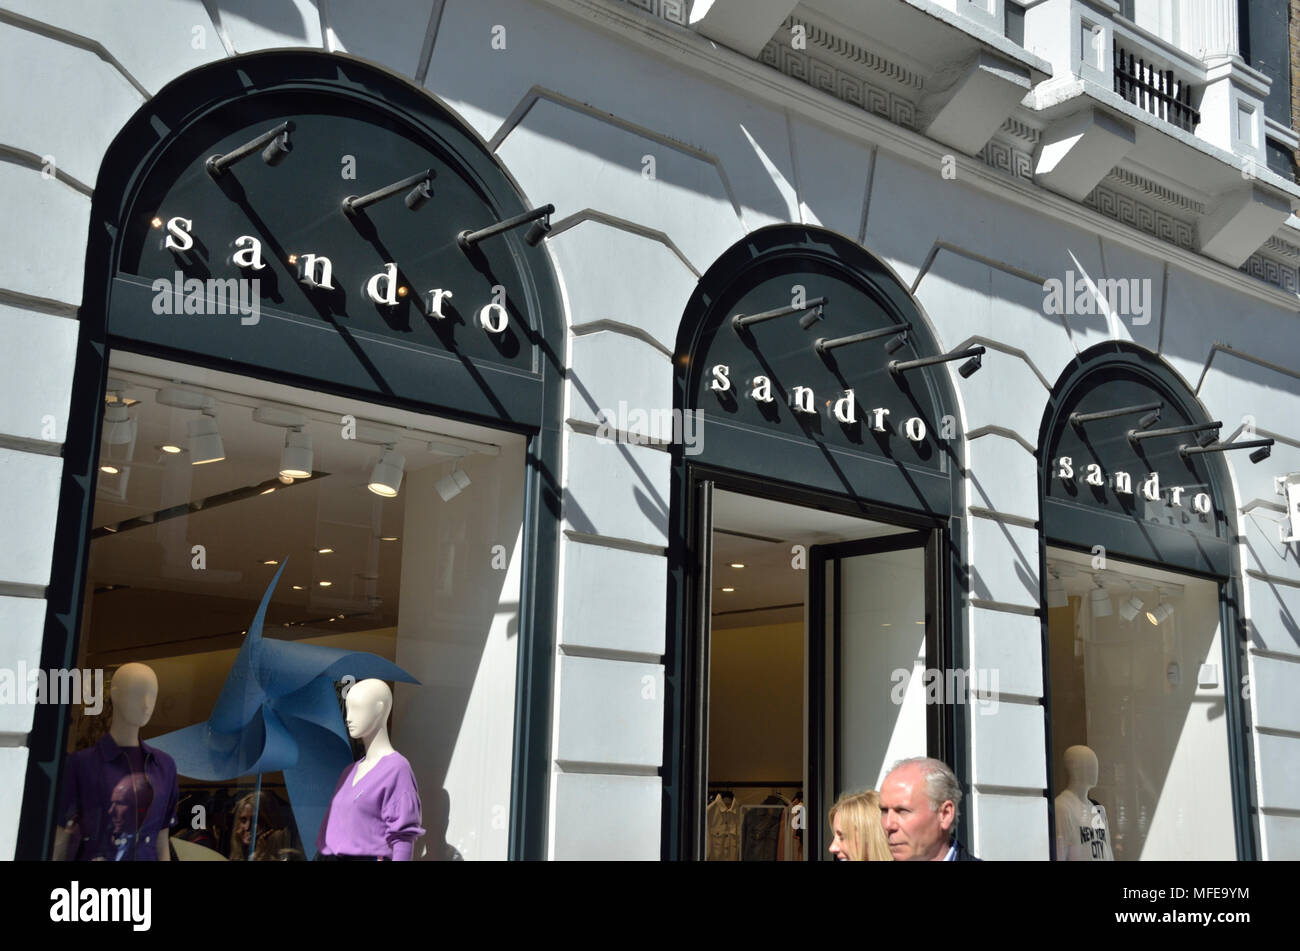 Sandro fashion store in King Street, Covent Garden, London, UK. Stock Photo